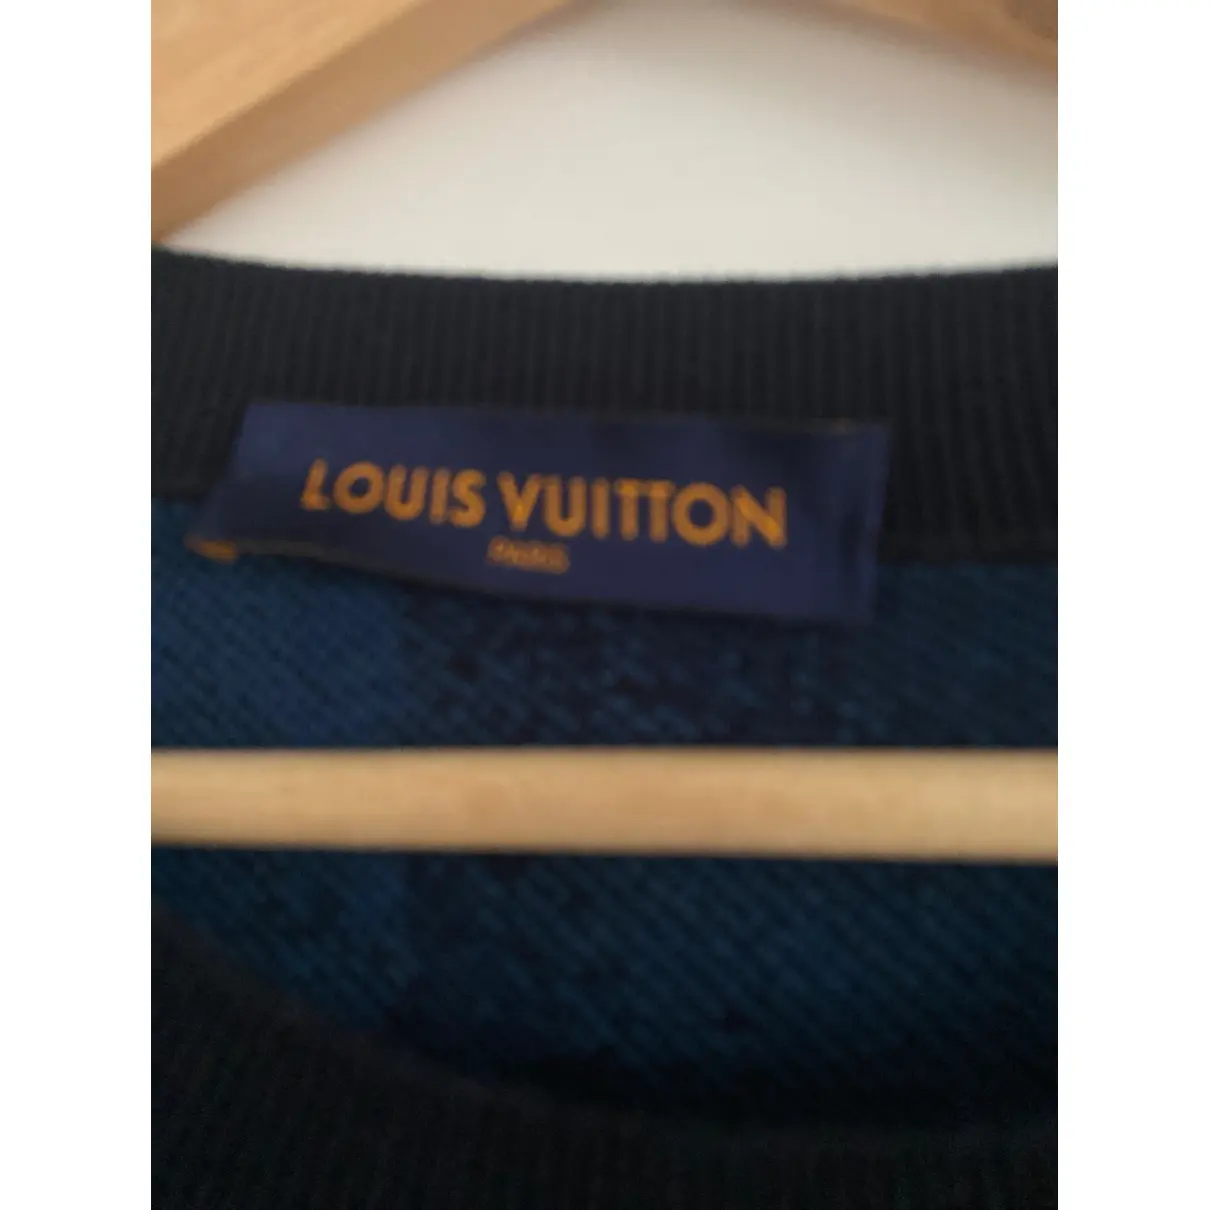 Buy Louis Vuitton Pull online